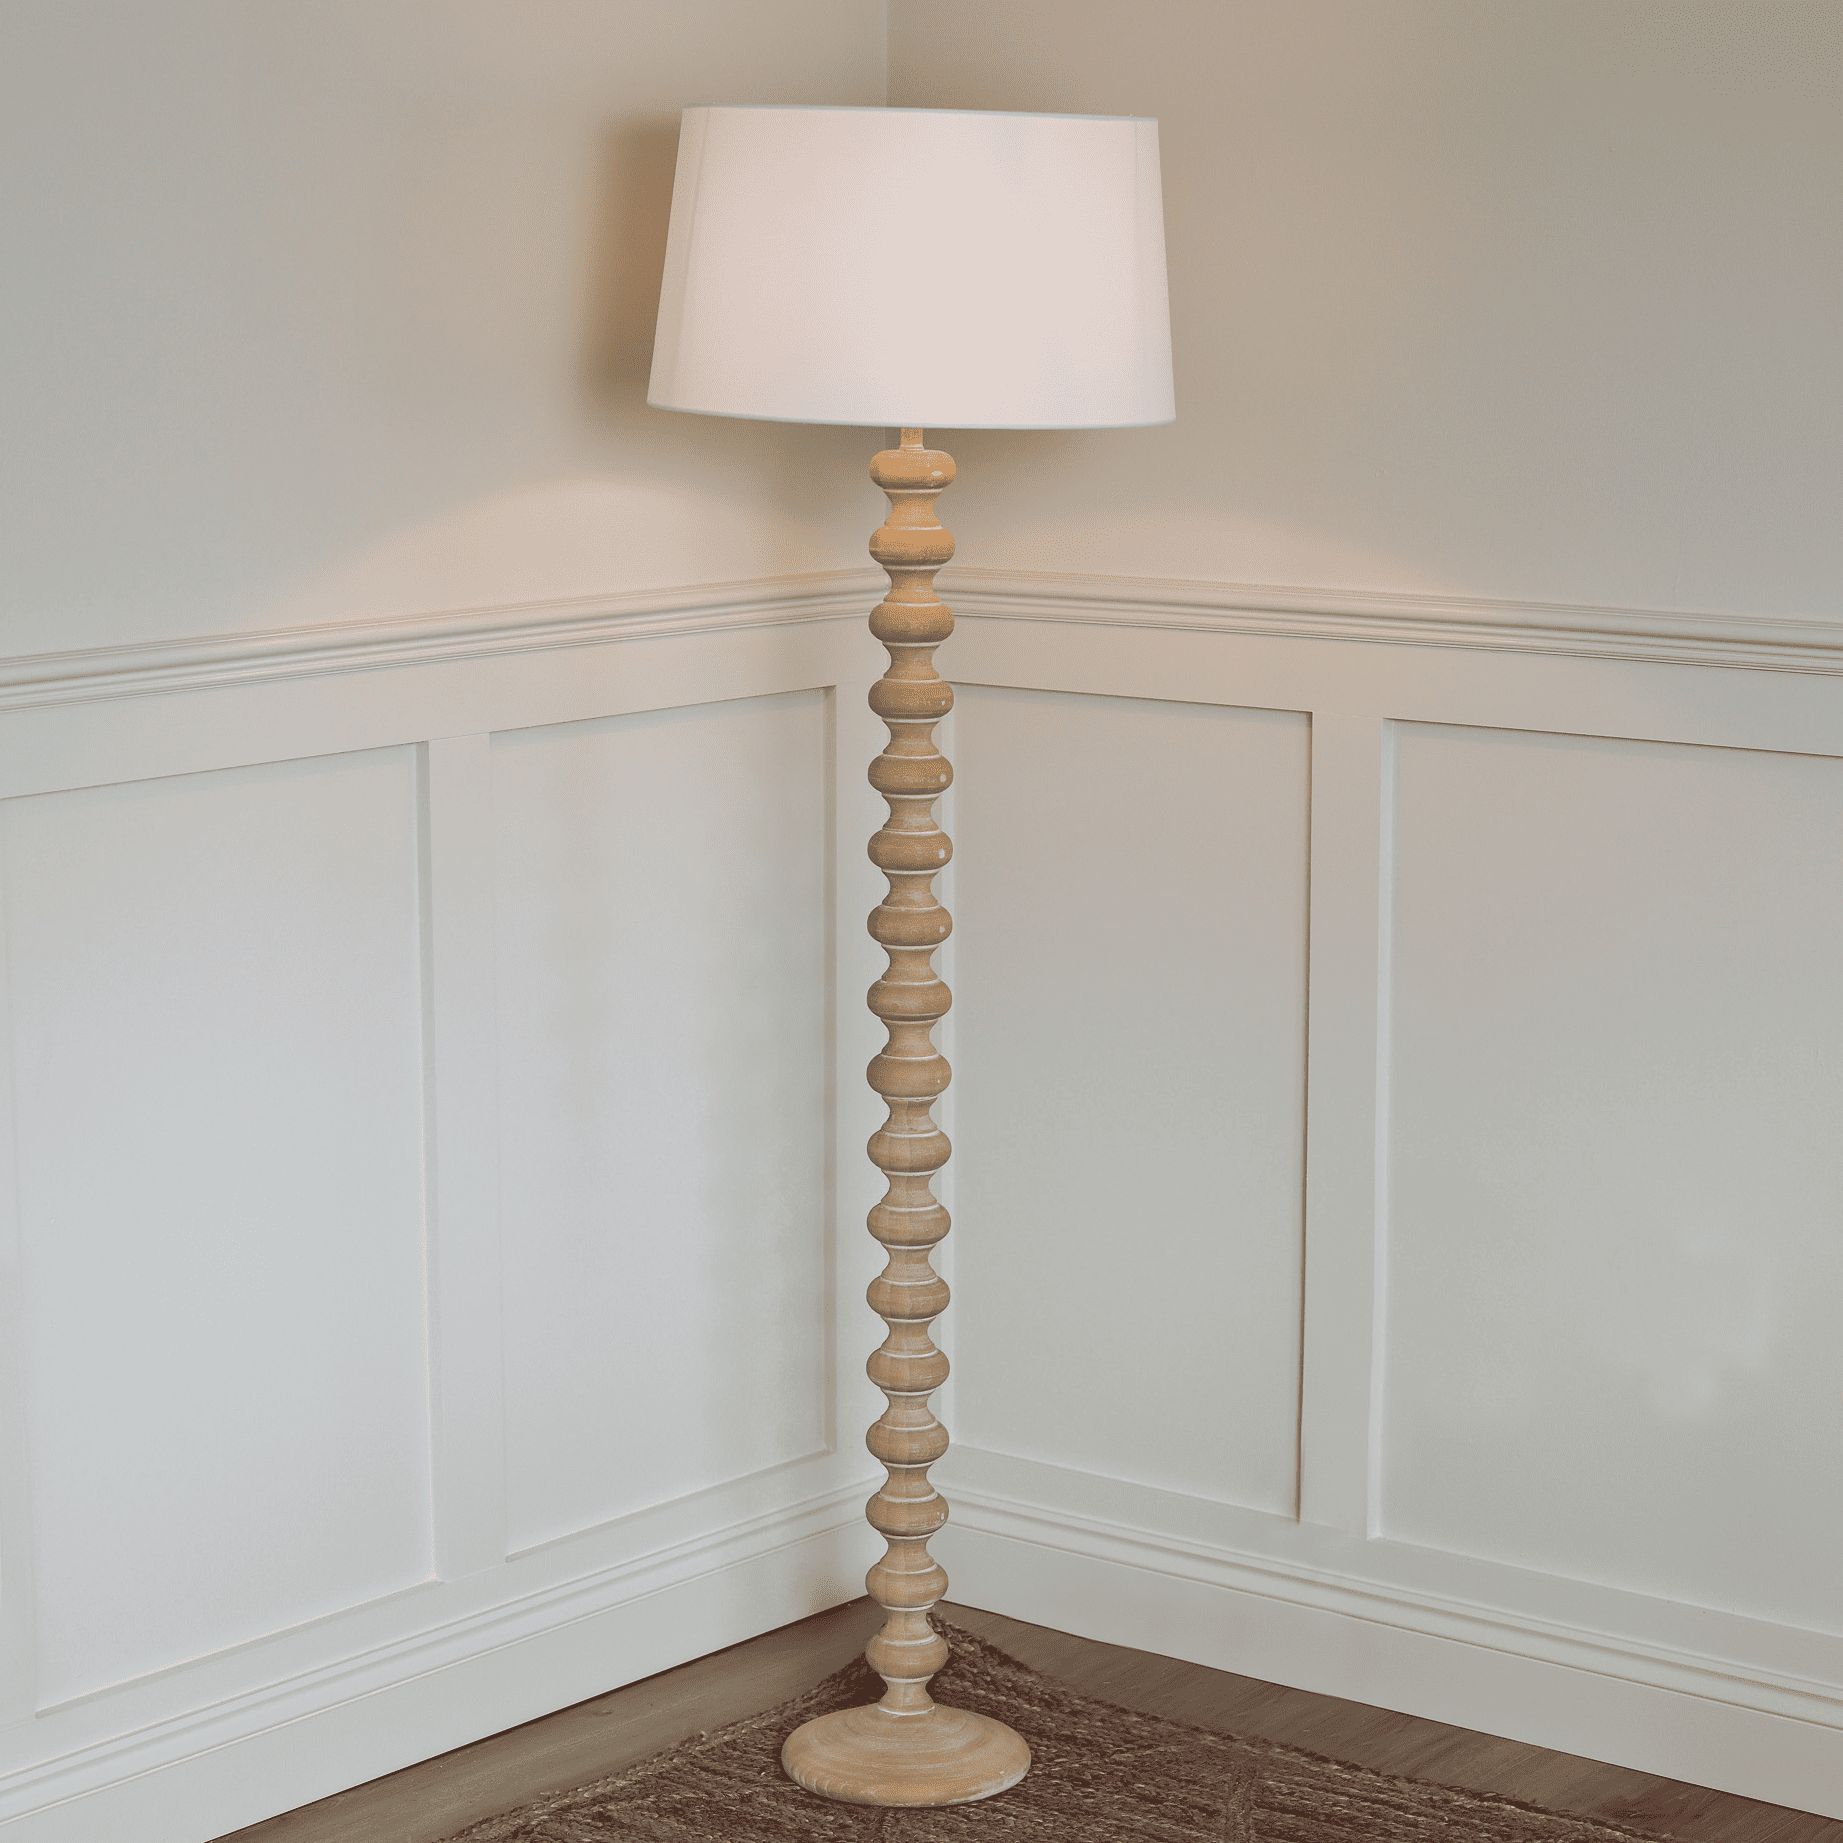 Wooden bobbin floor lamp lit with white linen shade in corner.